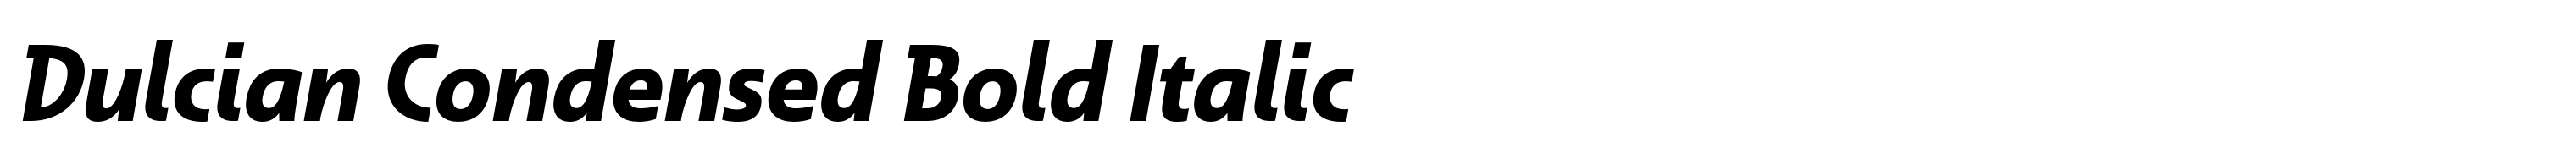 Dulcian Condensed Bold Italic